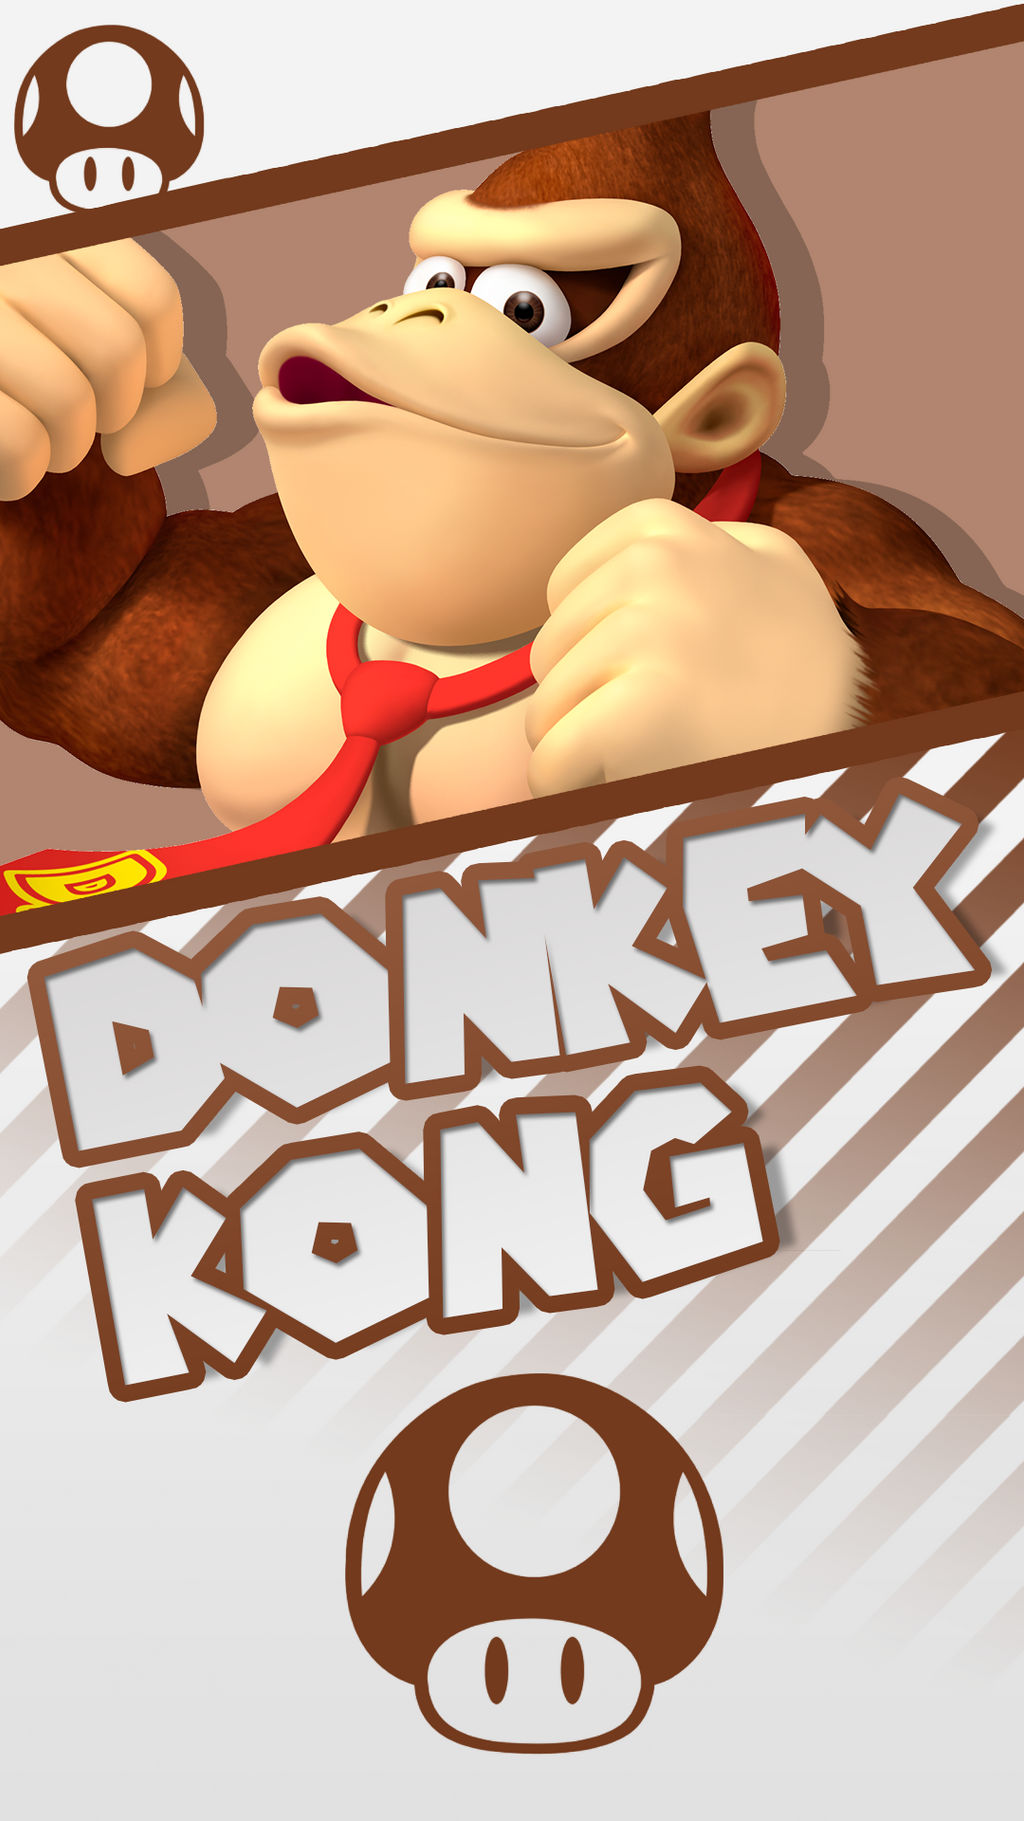 Donkey Kong Super Mario Phone Wallpaper by MrThatKidAlex24 on DeviantArt